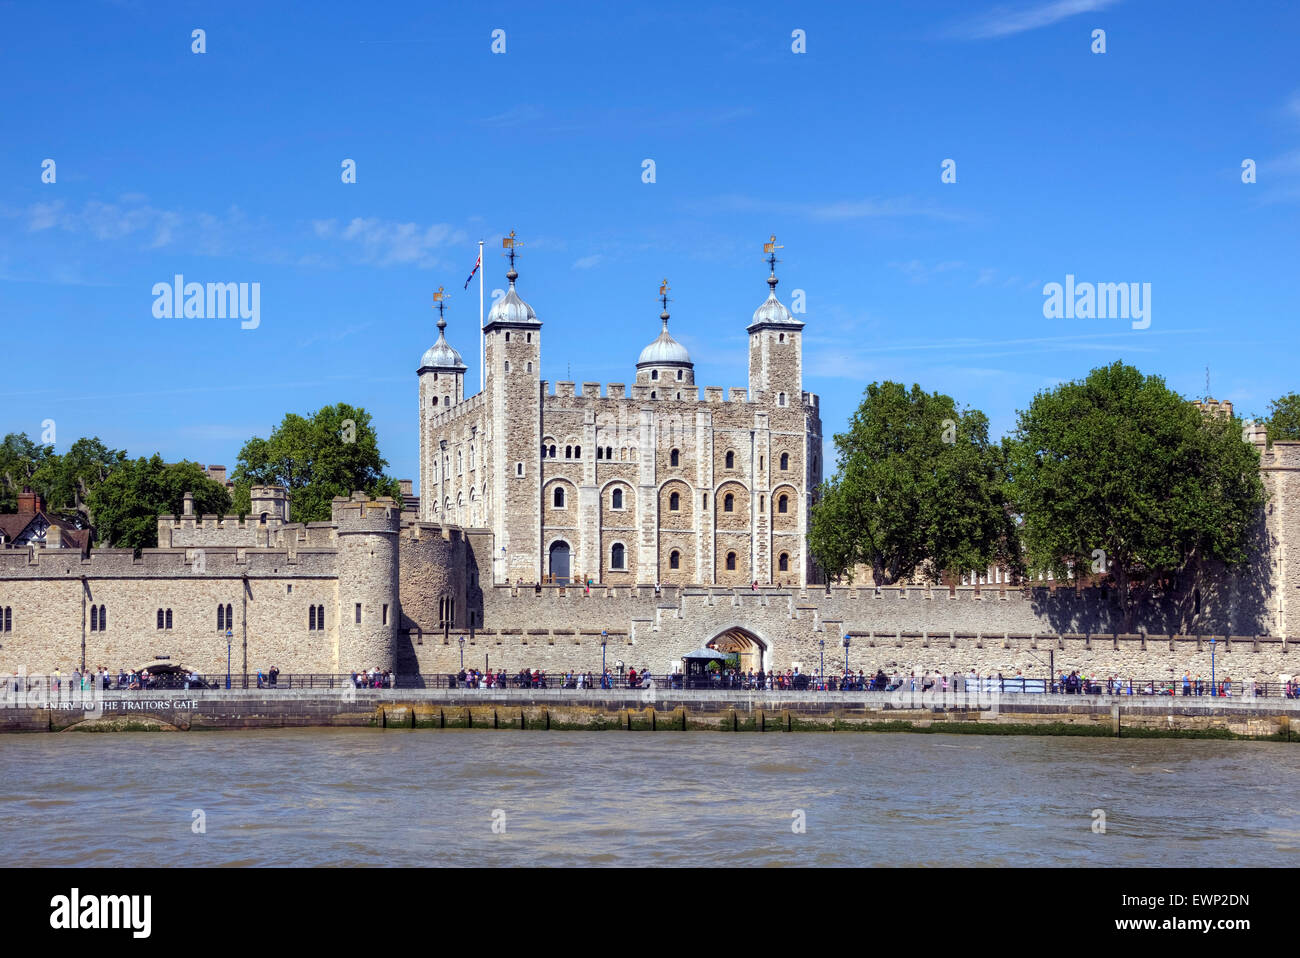 Tower of London, London, England, United Kingdom Stock Photo